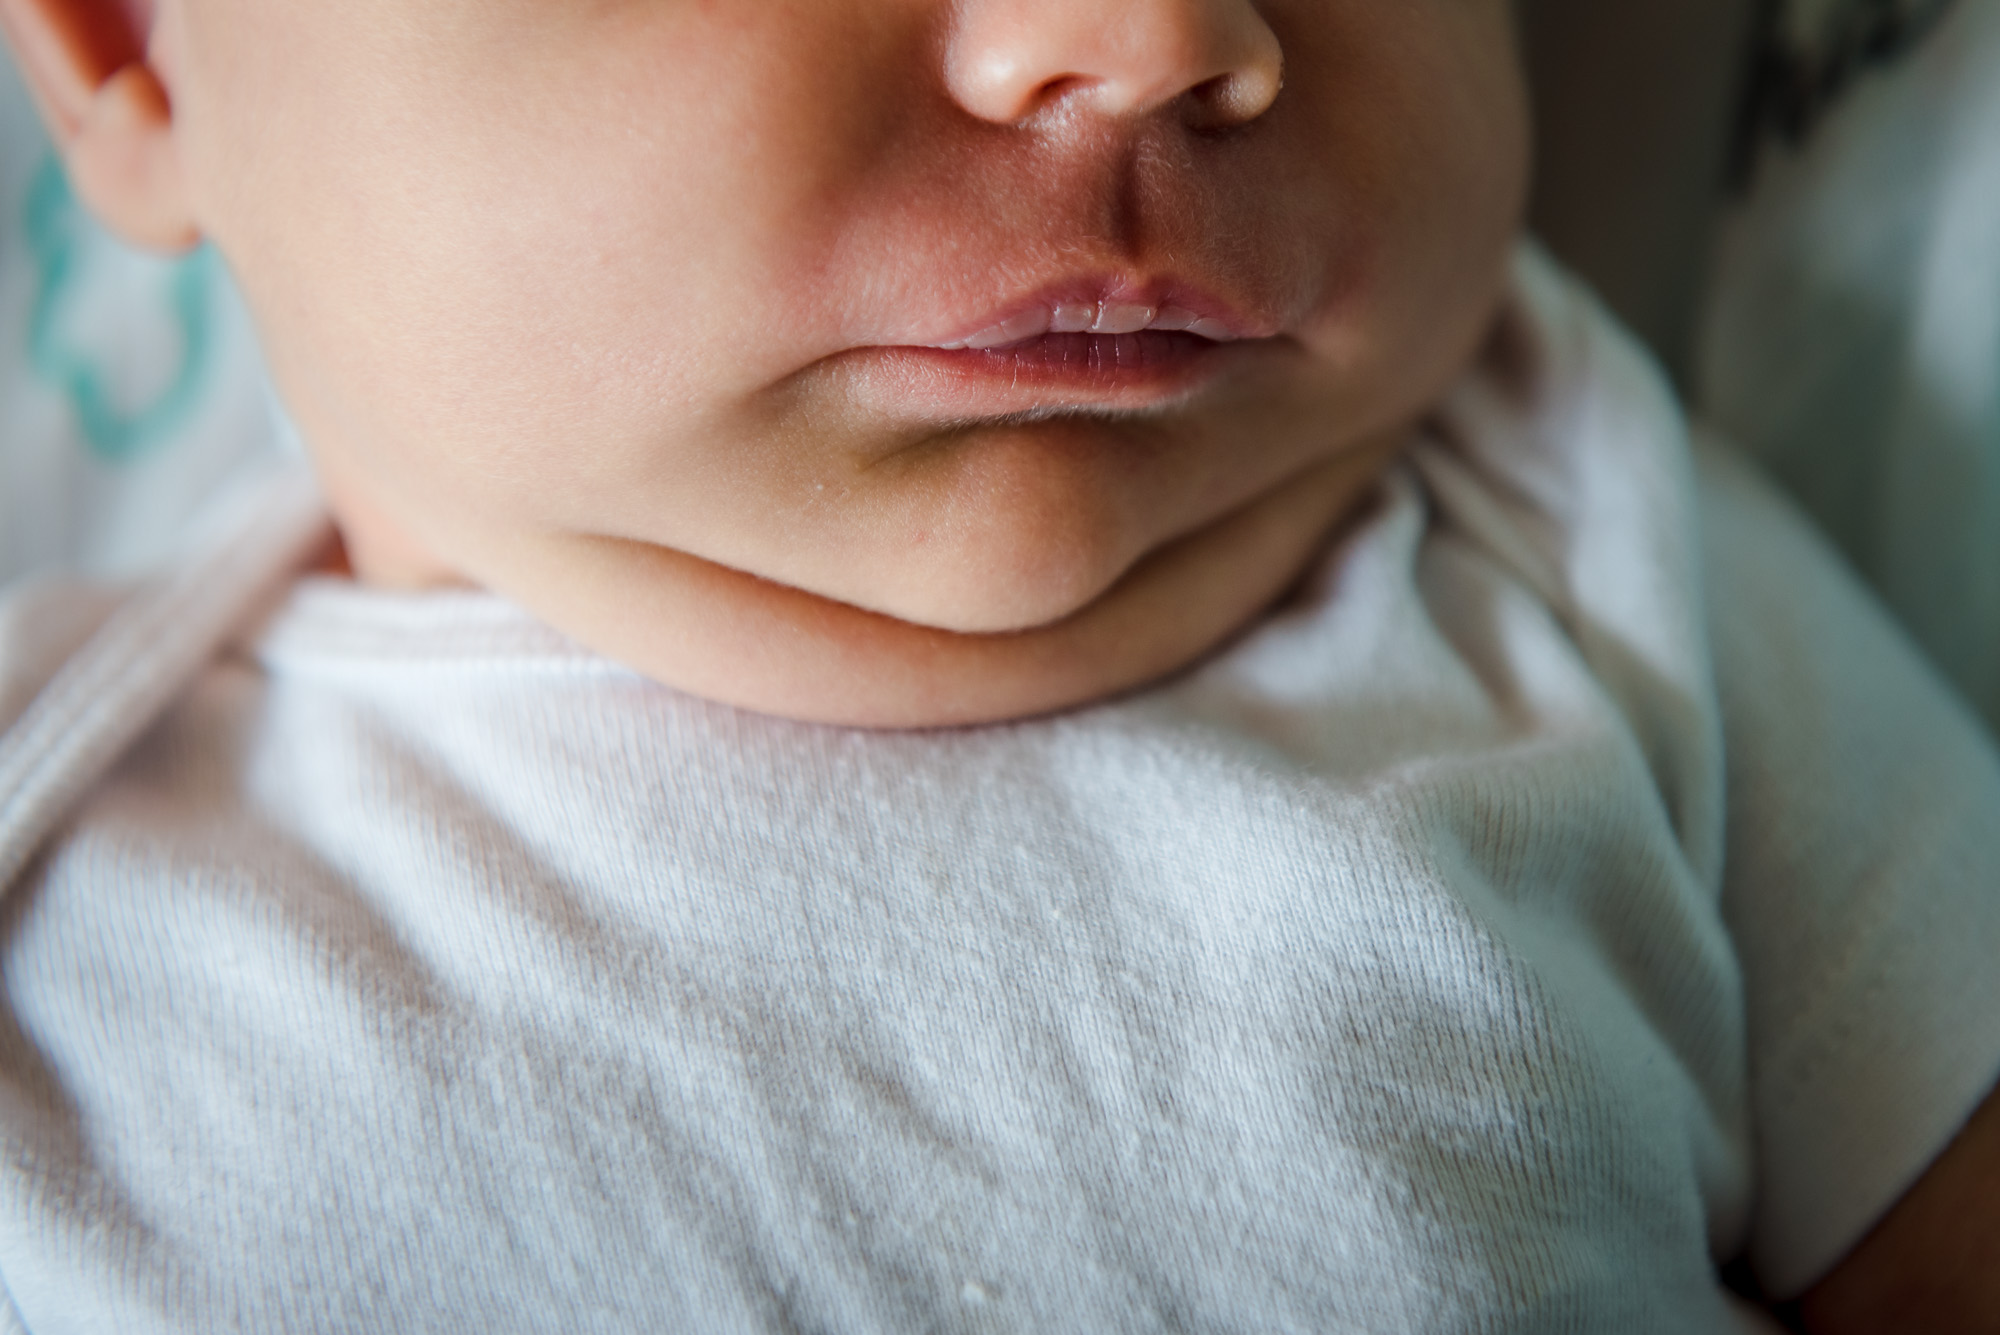 A baby's chin rolls